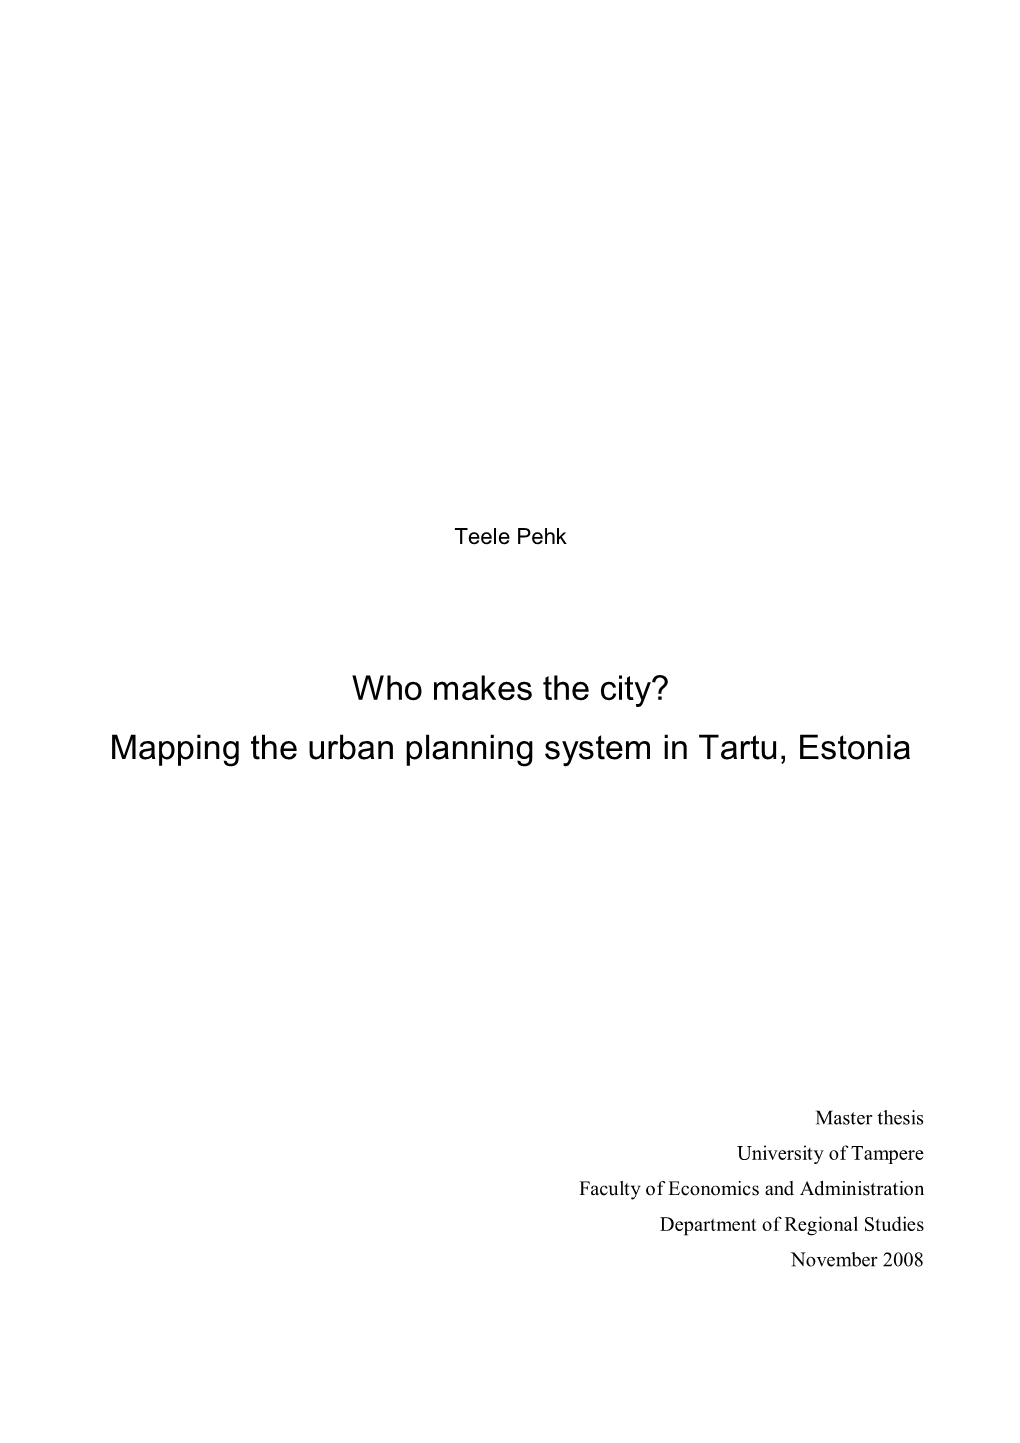 Mapping the Urban Planning System in Tartu, Estonia